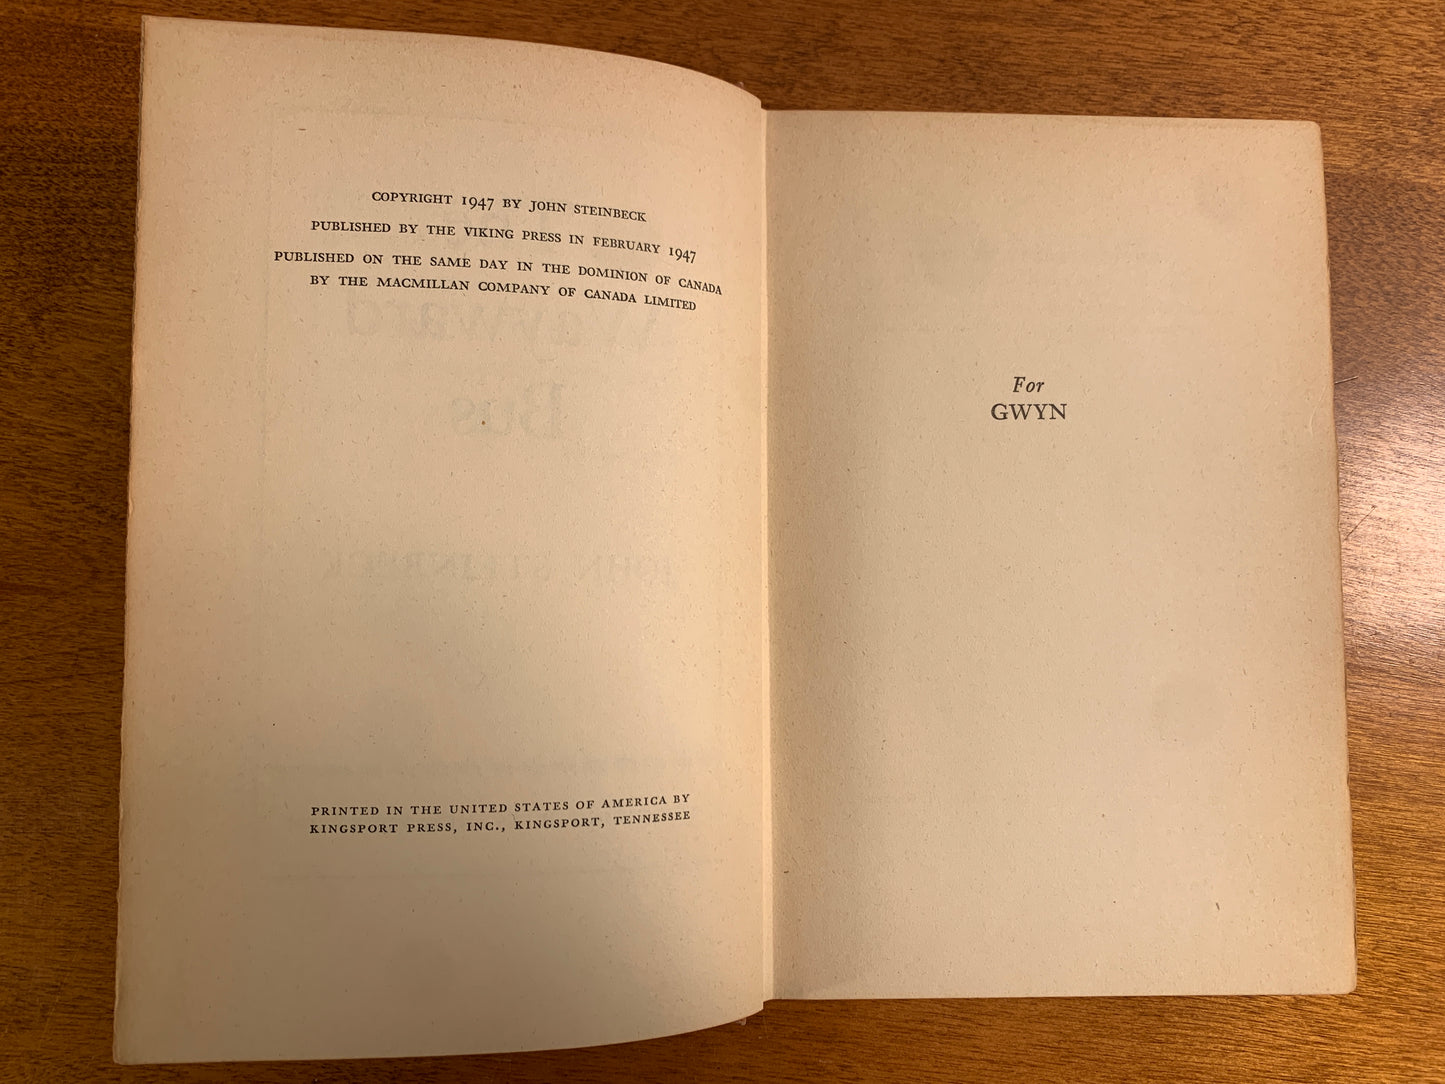 The Wayward Bus by John Steinbeck [1st Edition, 1947]